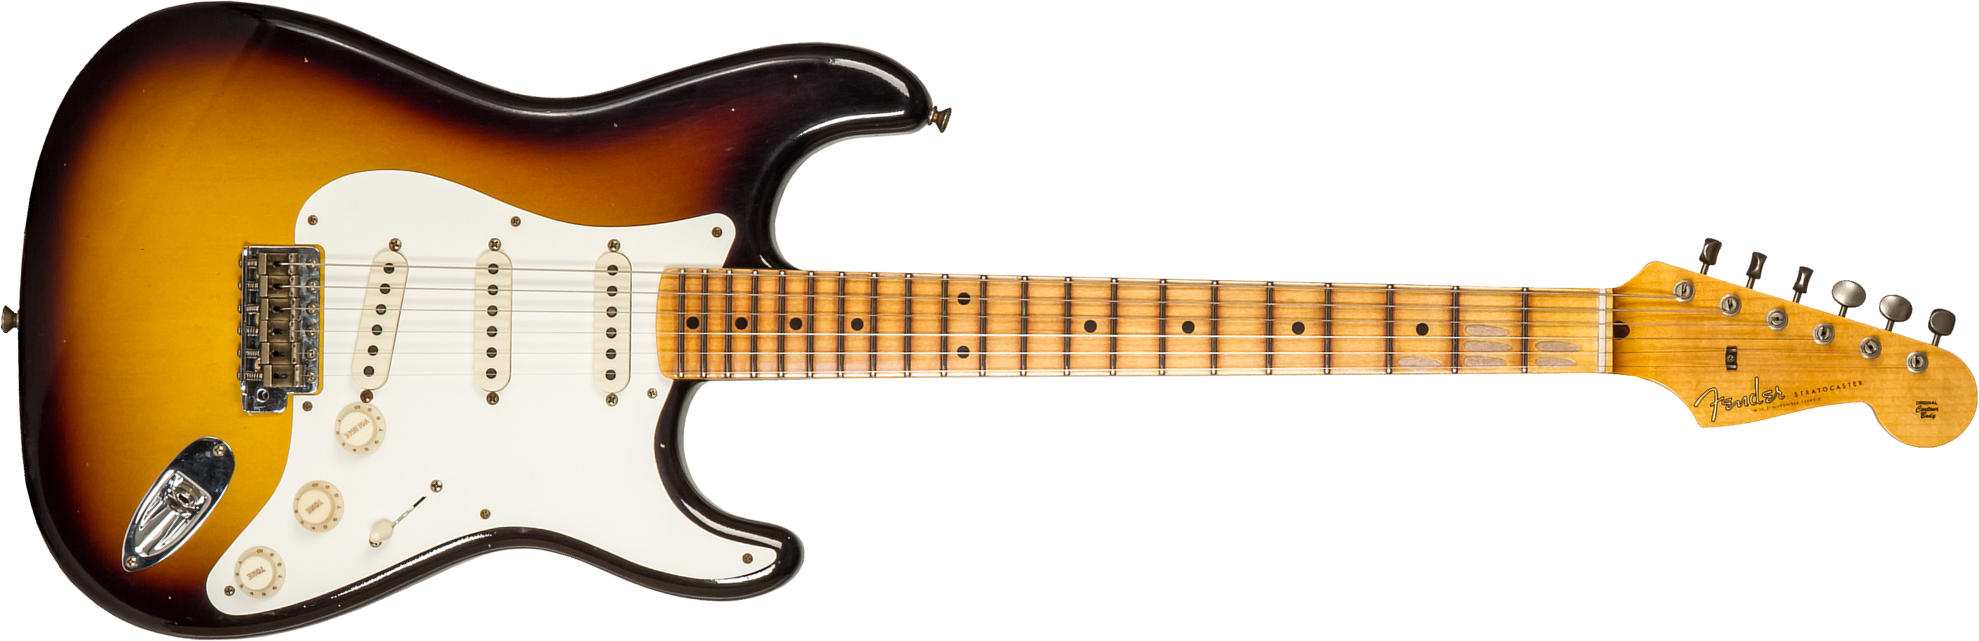 Fender Custom Shop Strat 1956 3s Trem Mn #cz575333 - Journeyman Relic 2-color Sunburst - Elektrische gitaar in Str-vorm - Main picture